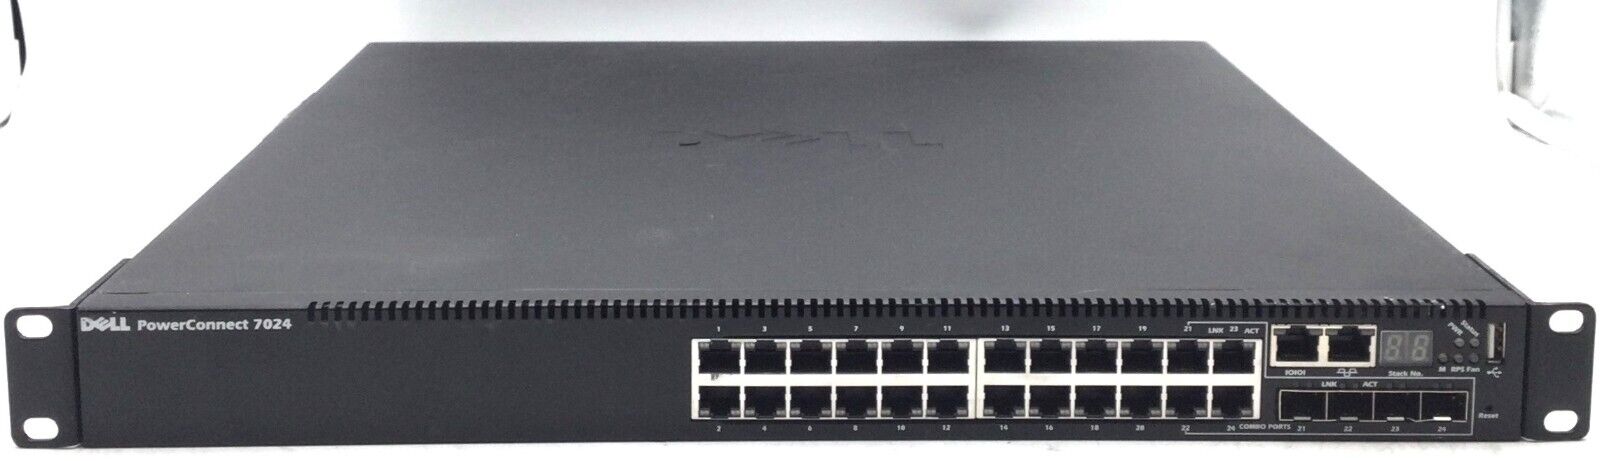 Dell PowerConnect 7024 24-Port PoE Gigabit Network Switch